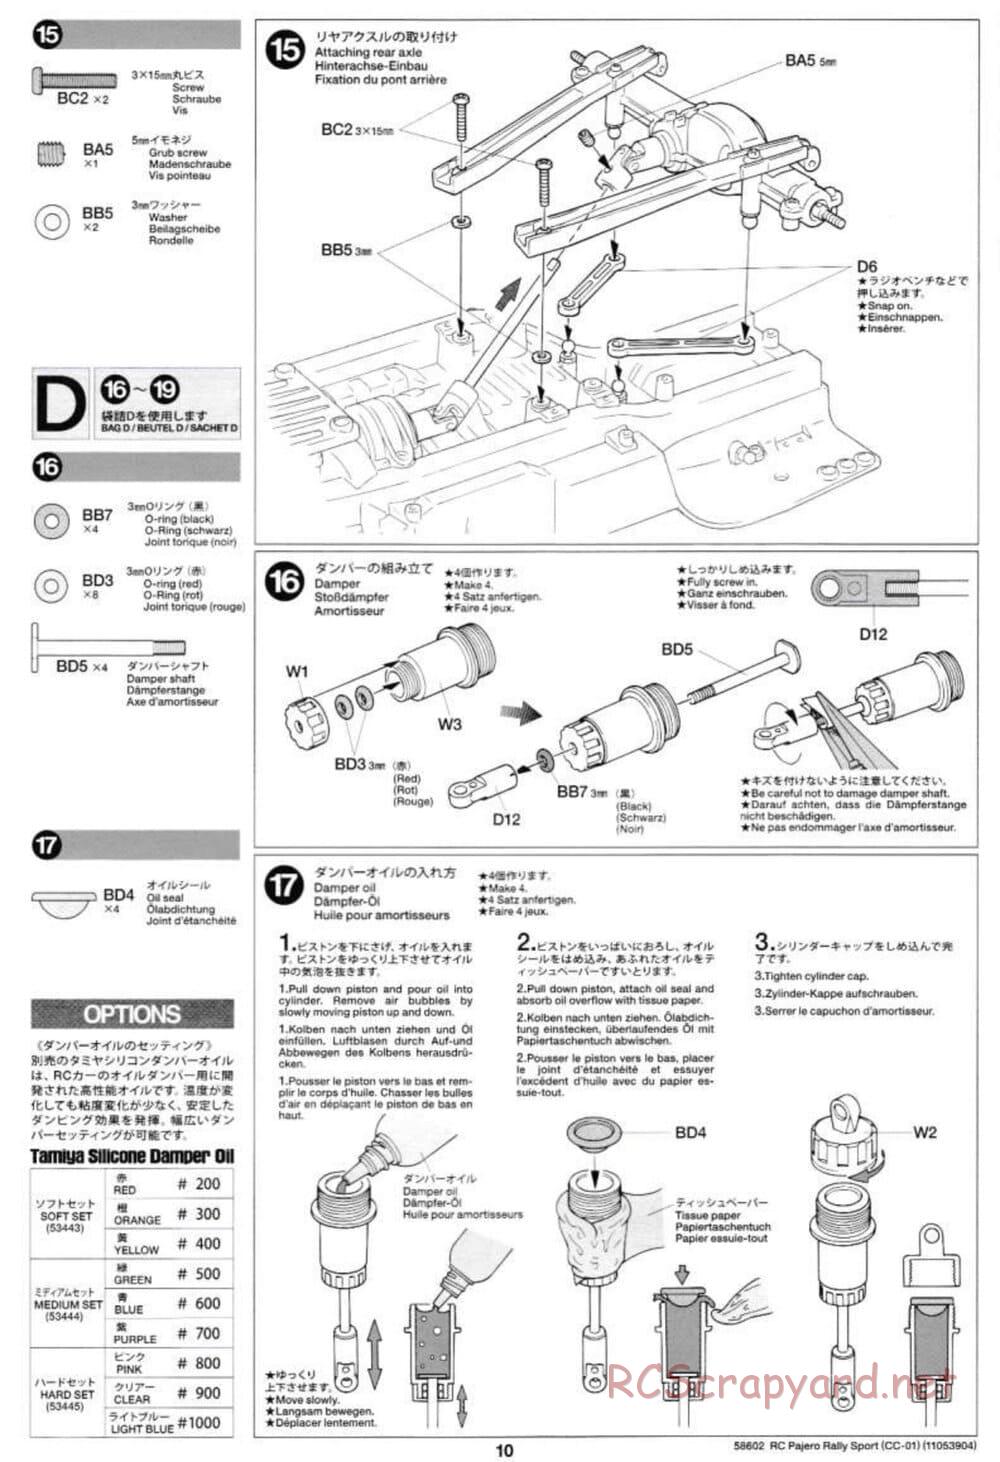 Tamiya - Mitsubishi Pajero Rally Sport - CC-01 Chassis - Manual - Page 10